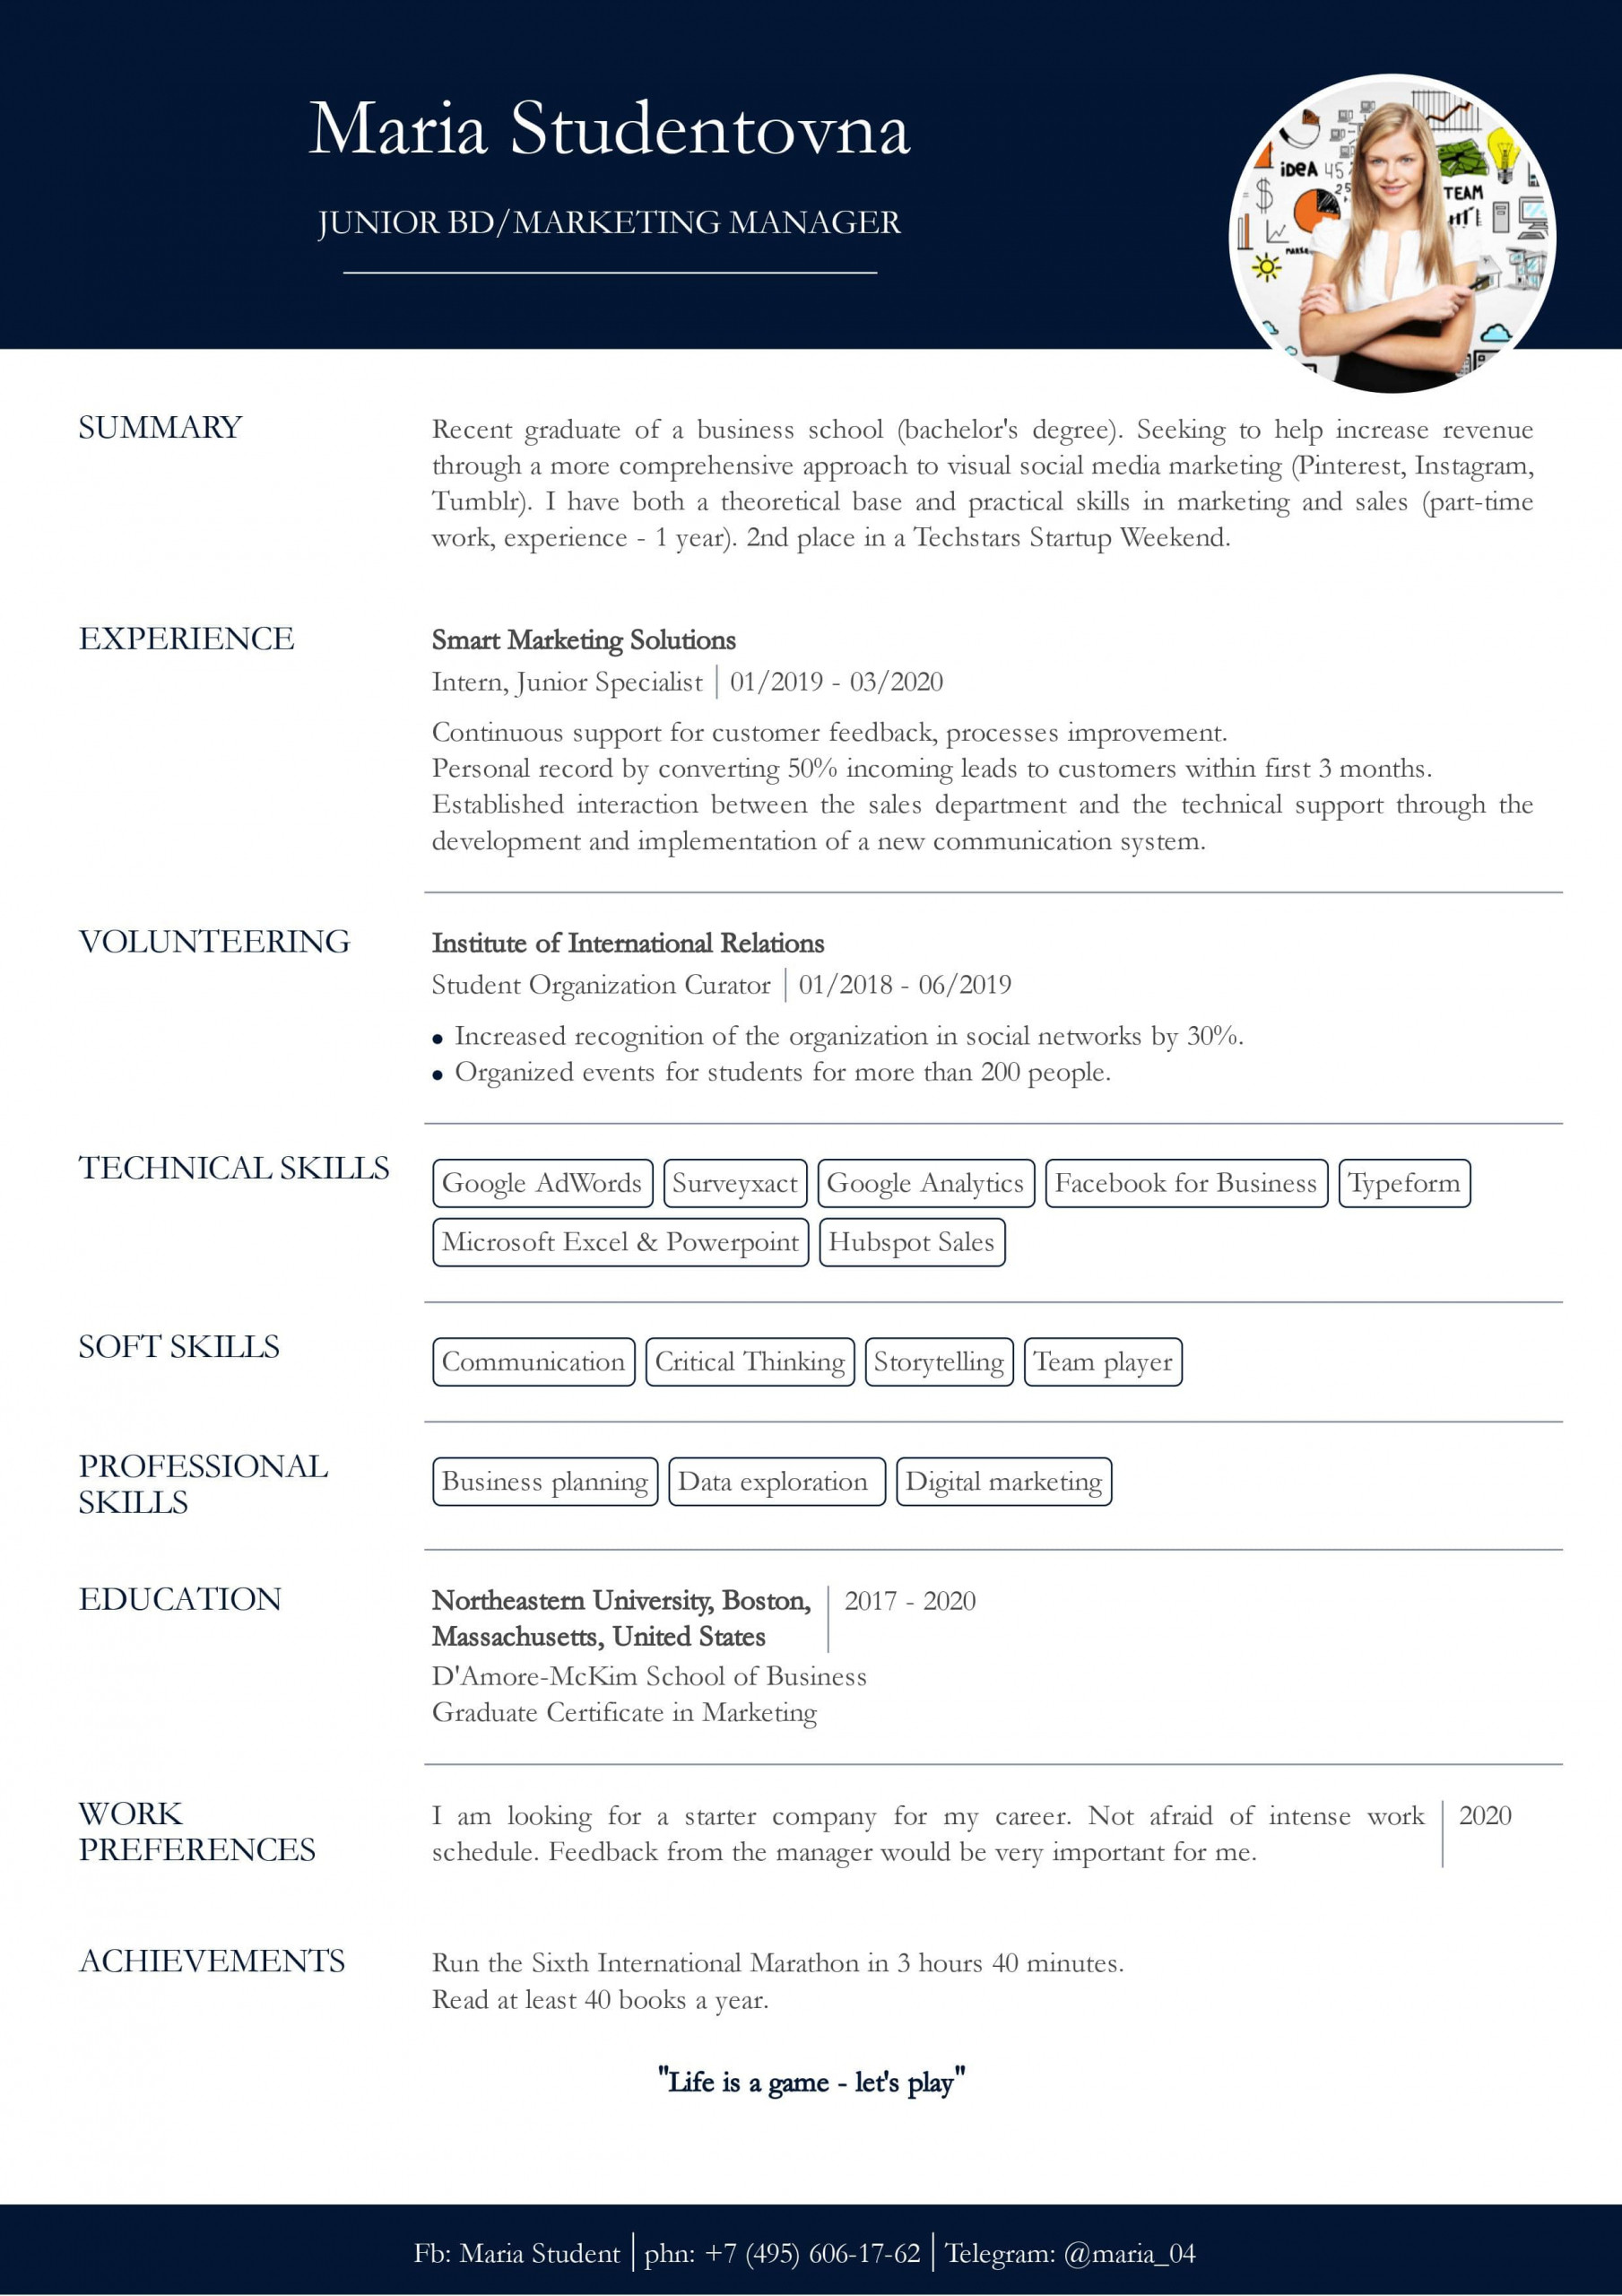 Resume Sample for Internship with No Experience Resume with No Work Experience. Sample for Students. – Cv2you Blog